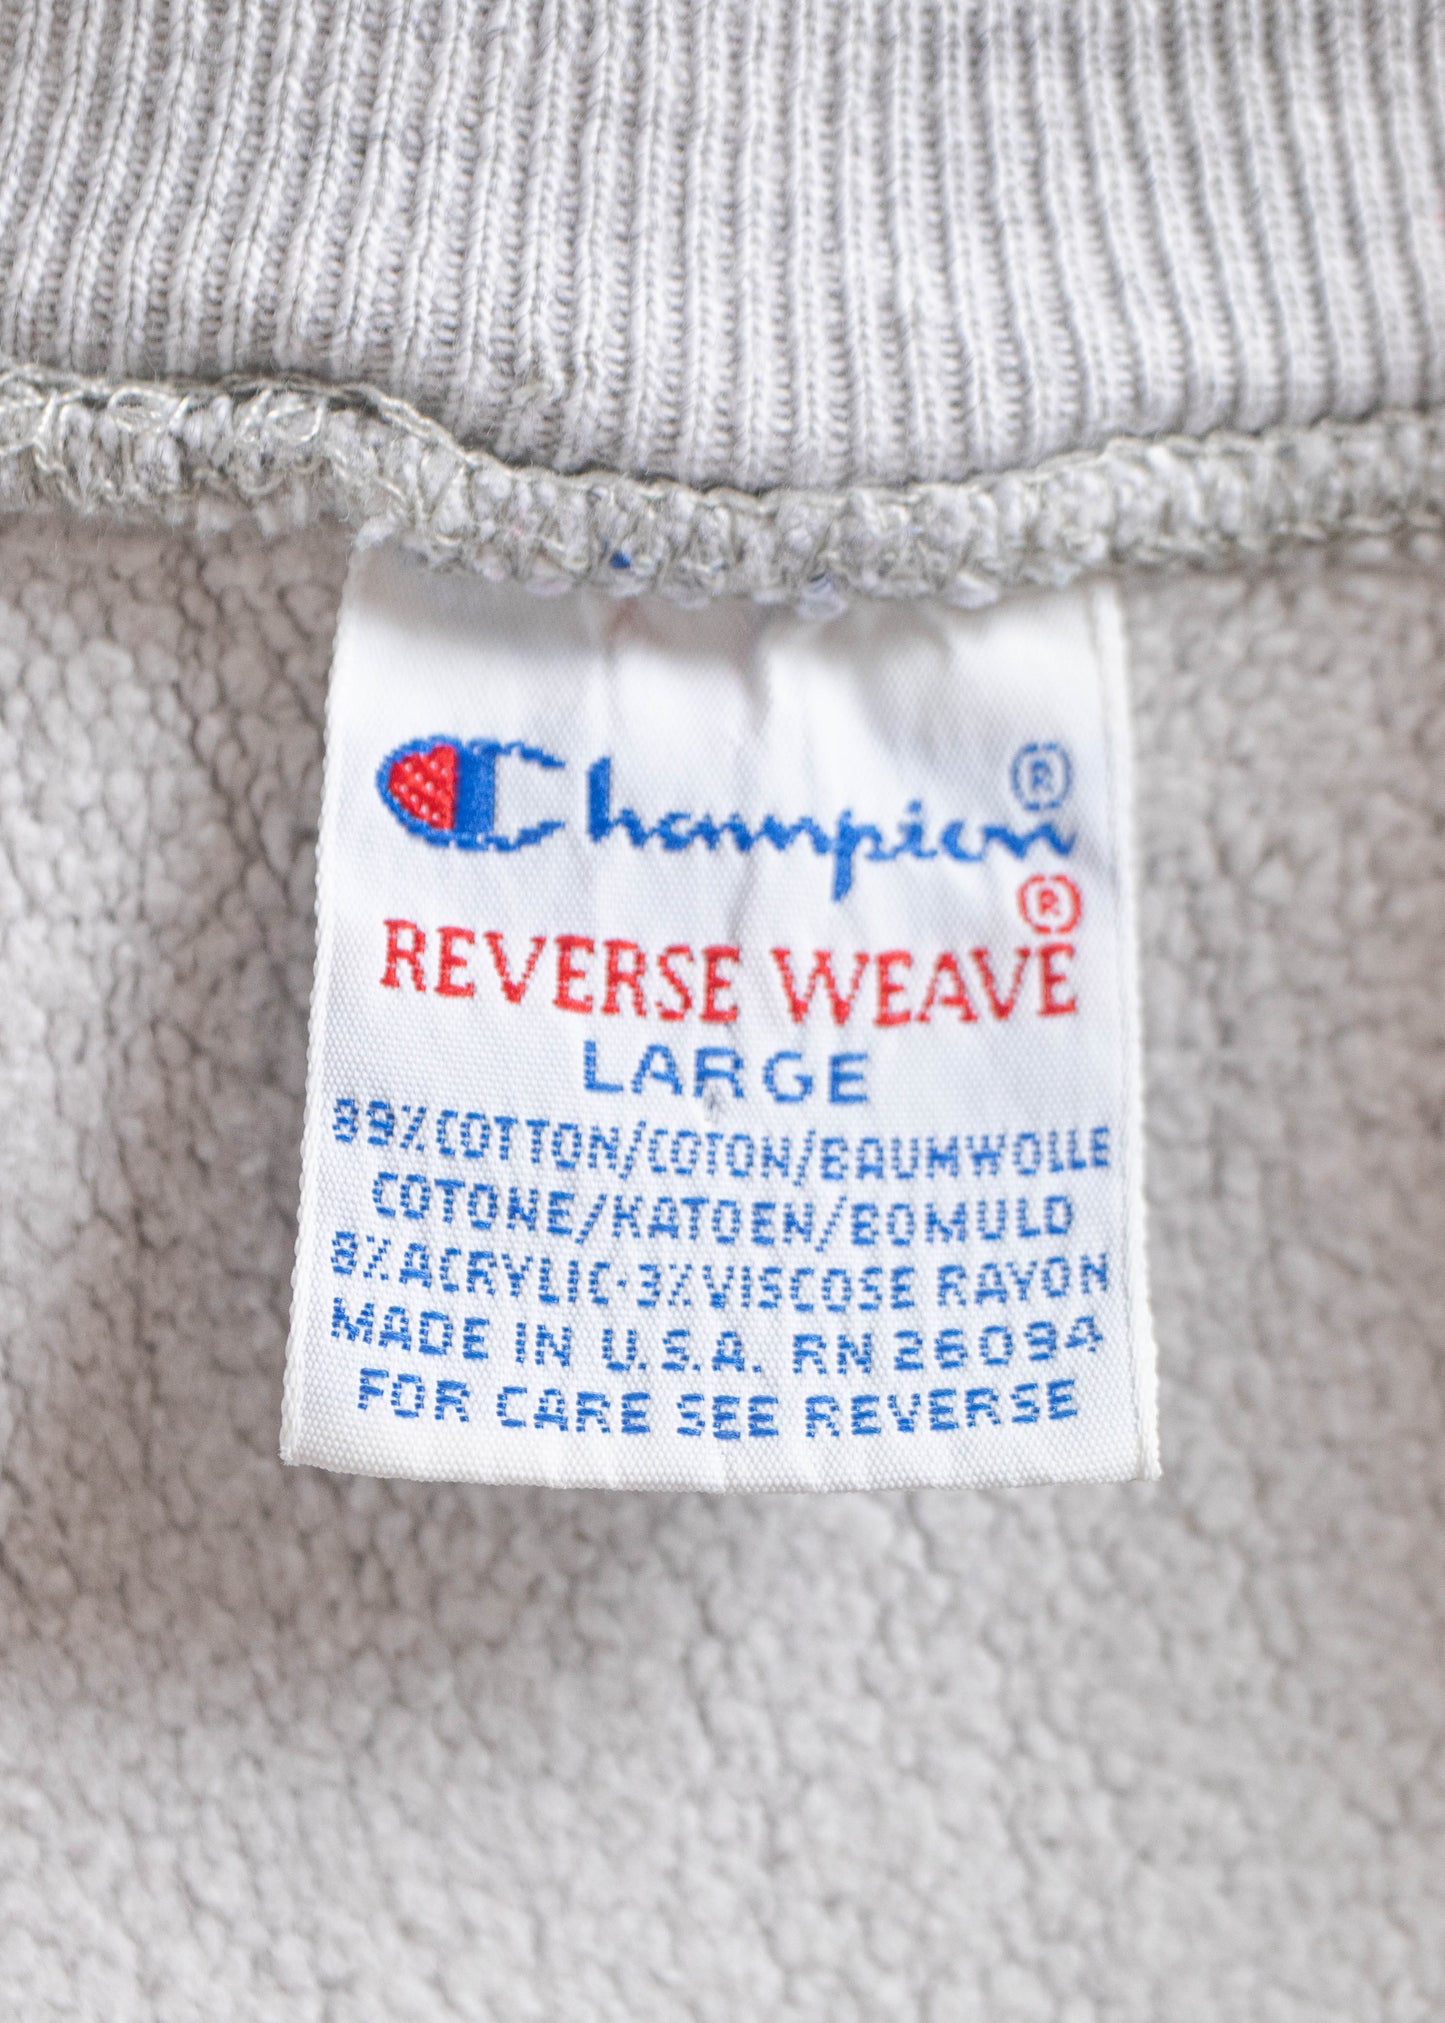 Vintage 1990s Champion Reverse Weave North Carolina Sweatshirt Size S/M